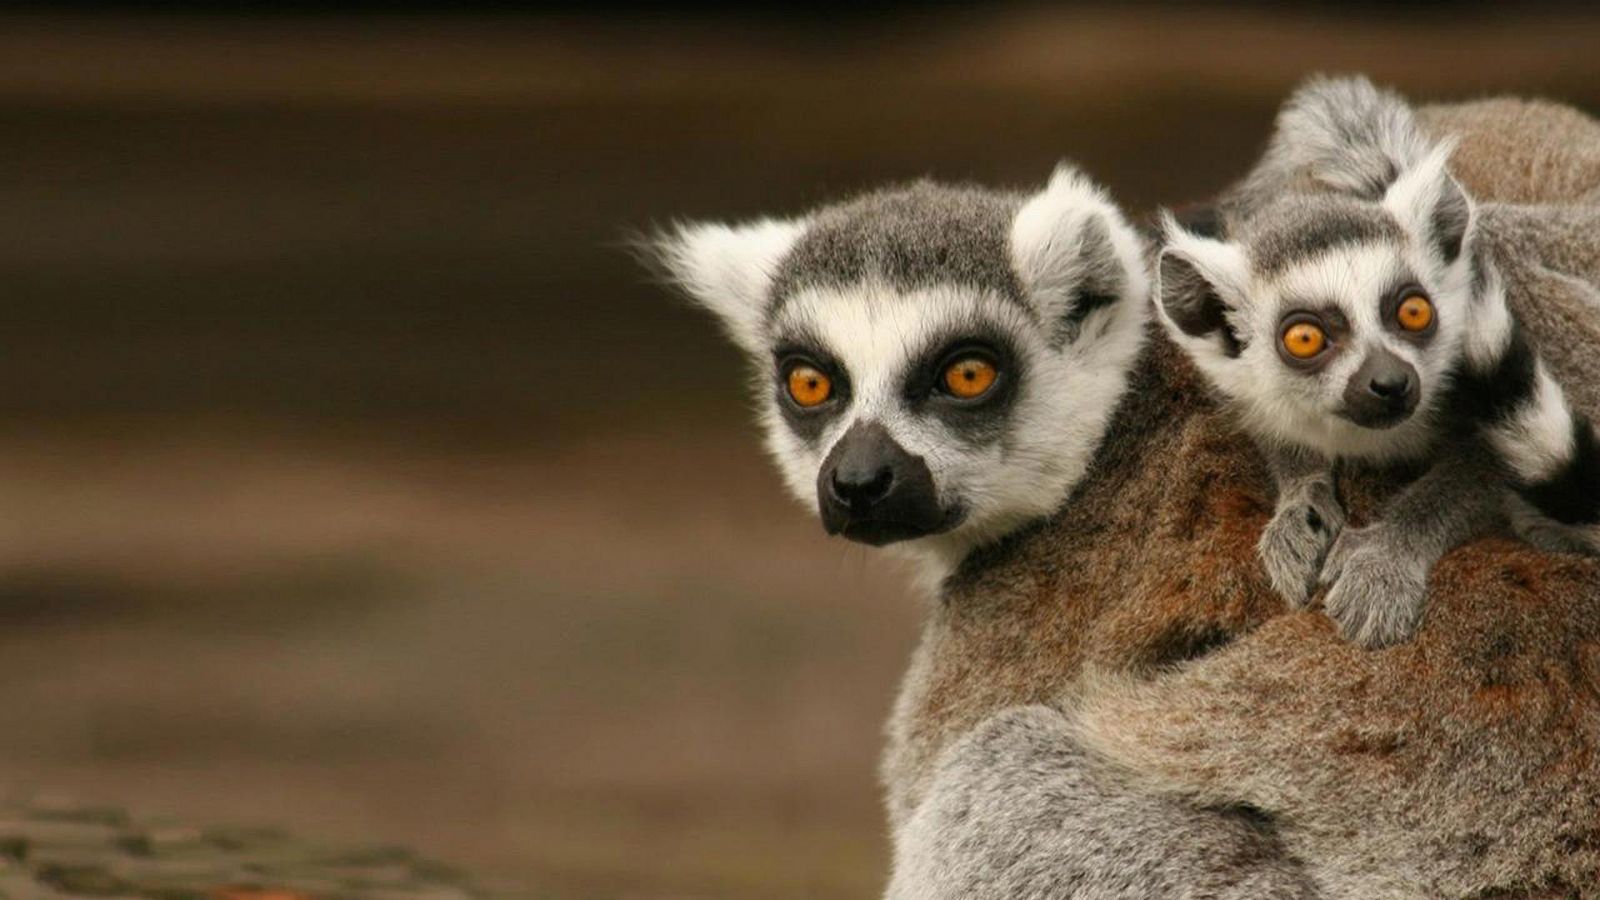 Somos documentales - Lémures legendarios de Madagascar - Documental en RTVE